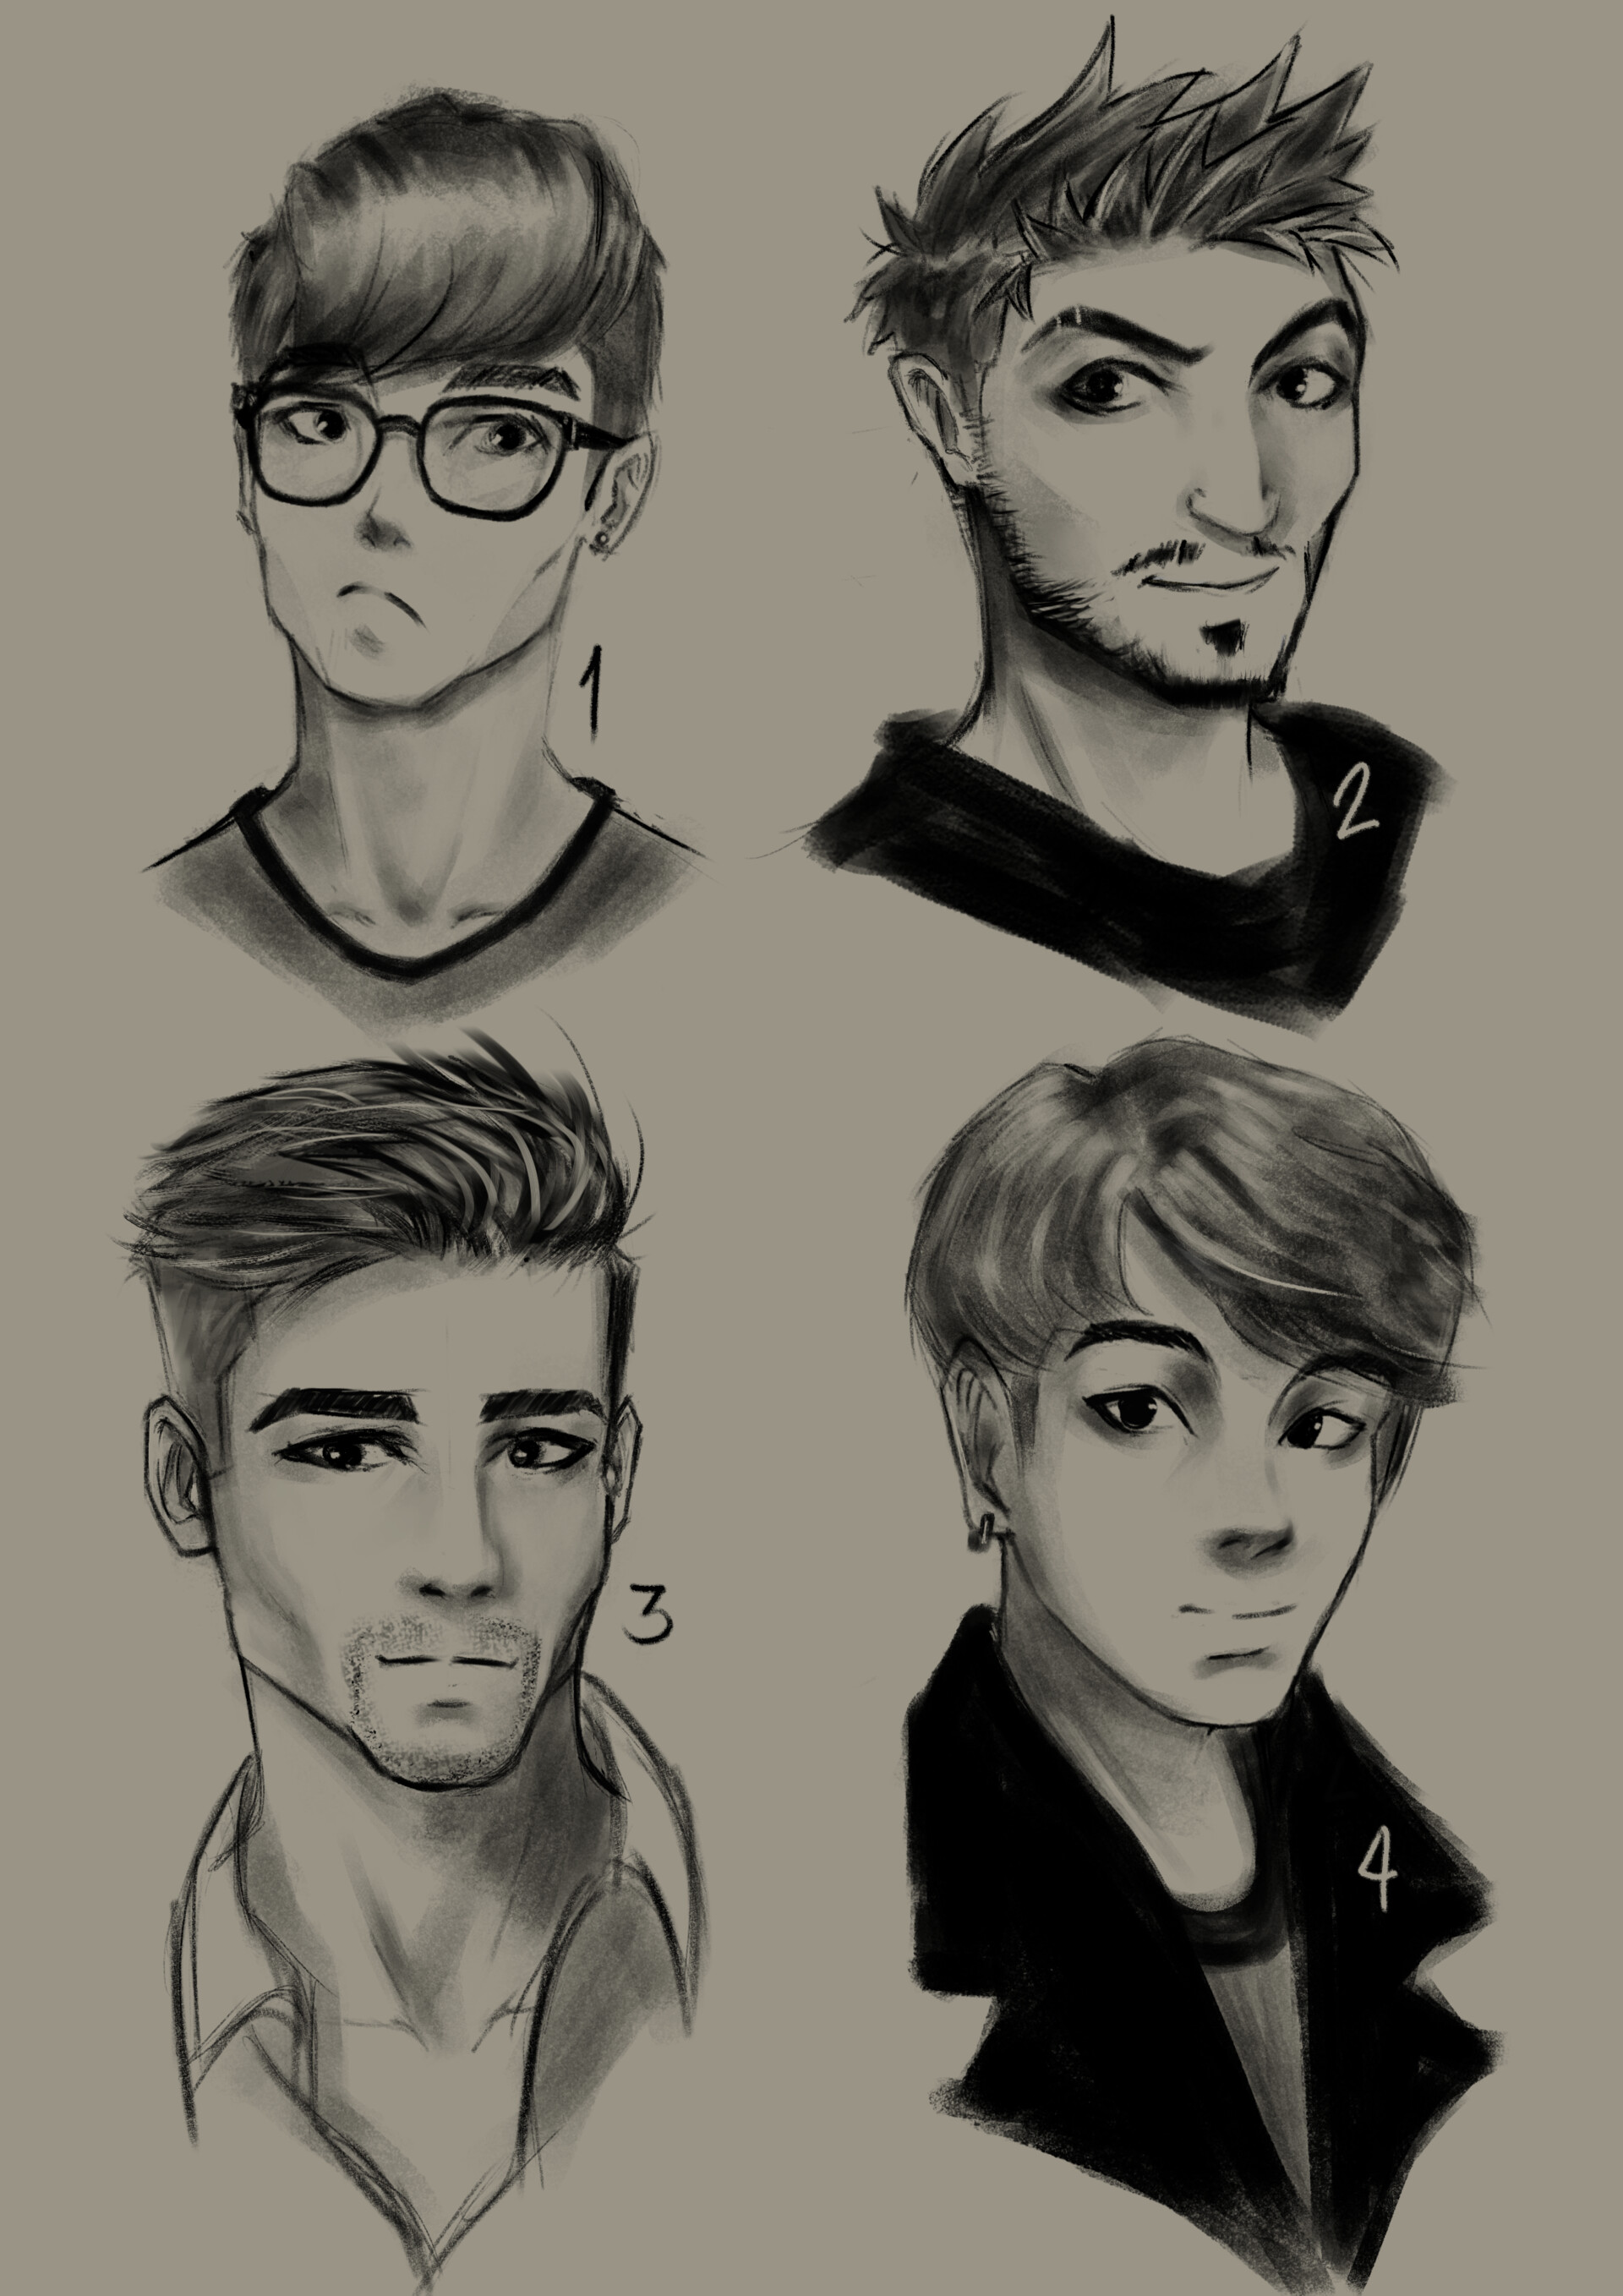 ArtStation - Handsome men sketches